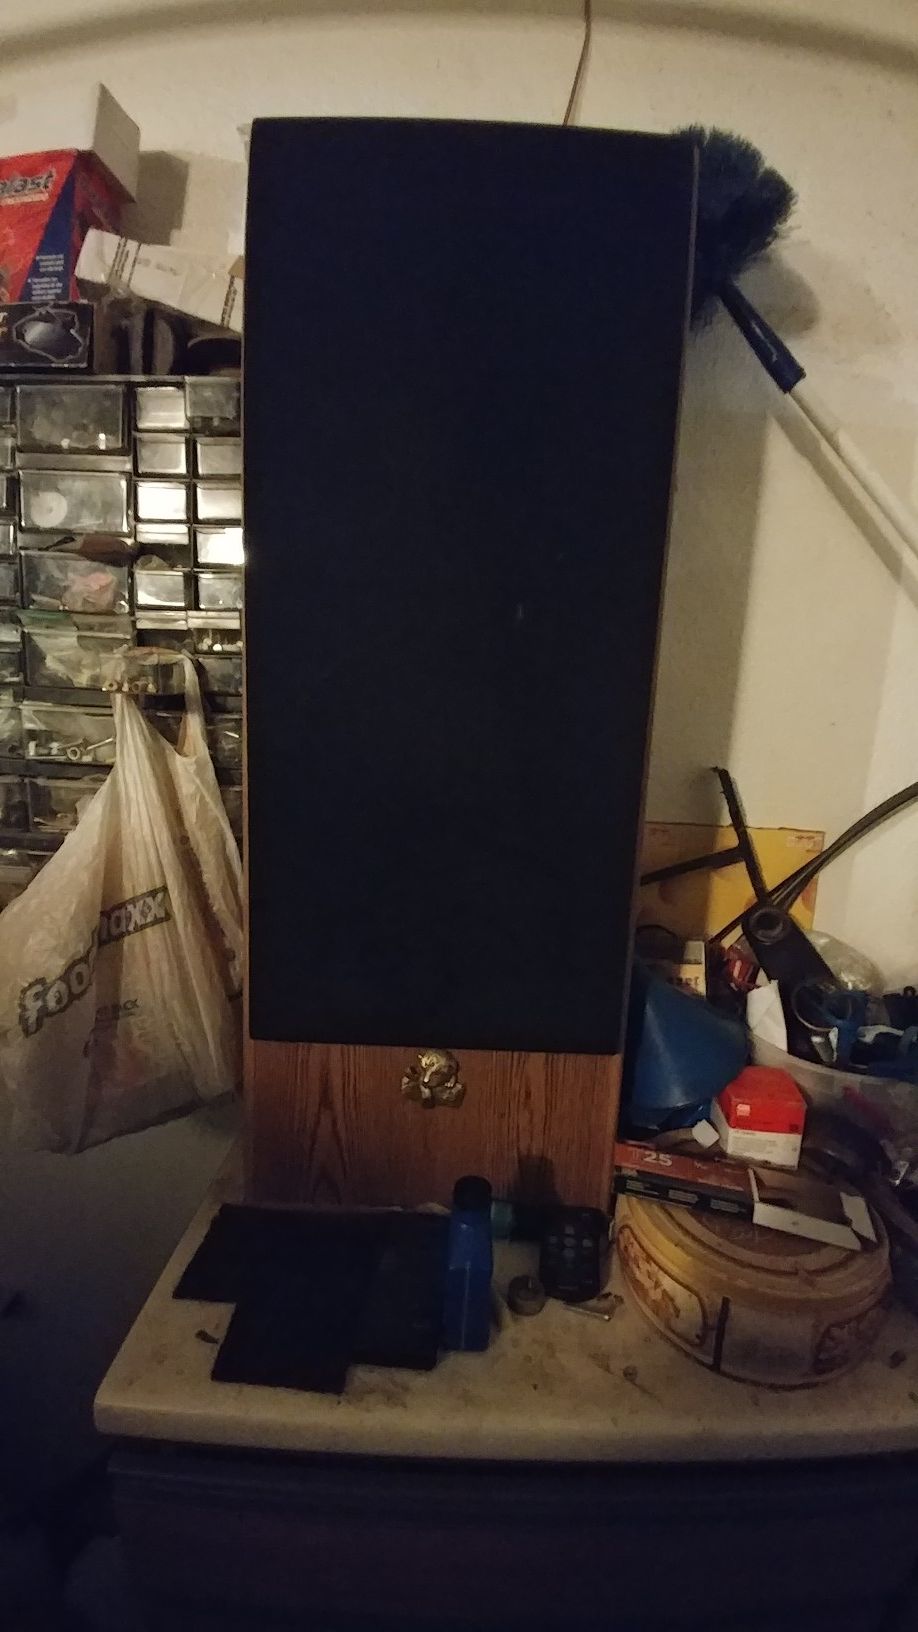 12 inch Onkyo speakers